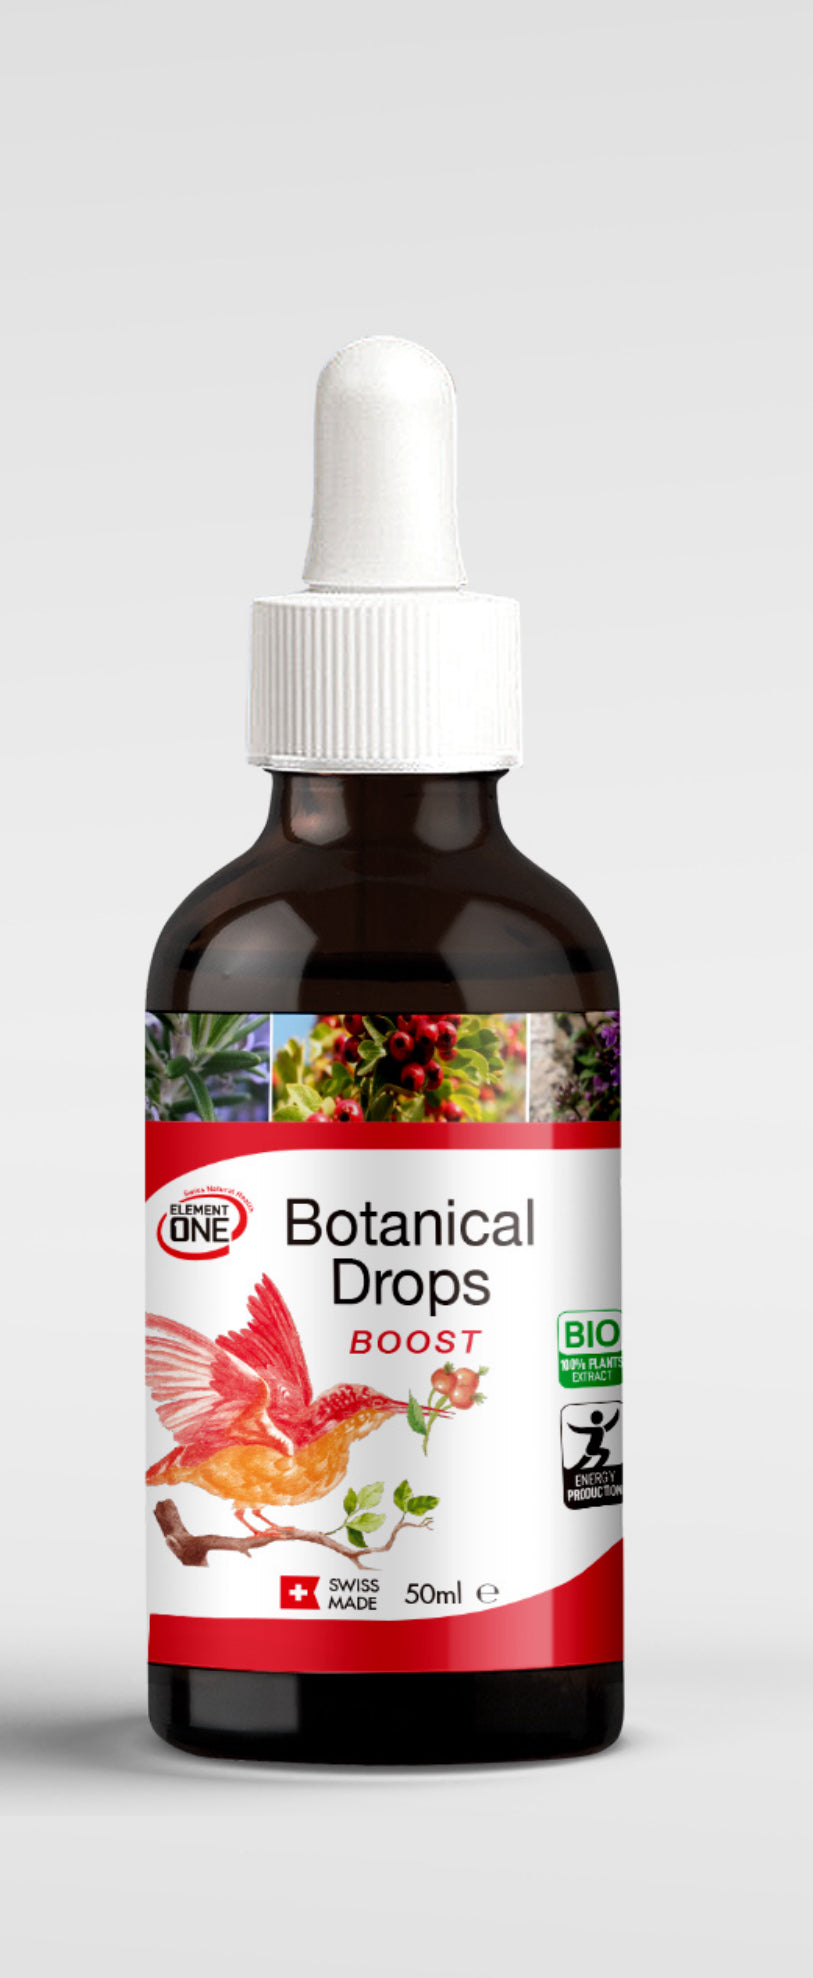 Element One Botanical Drops BOOST 50 ml